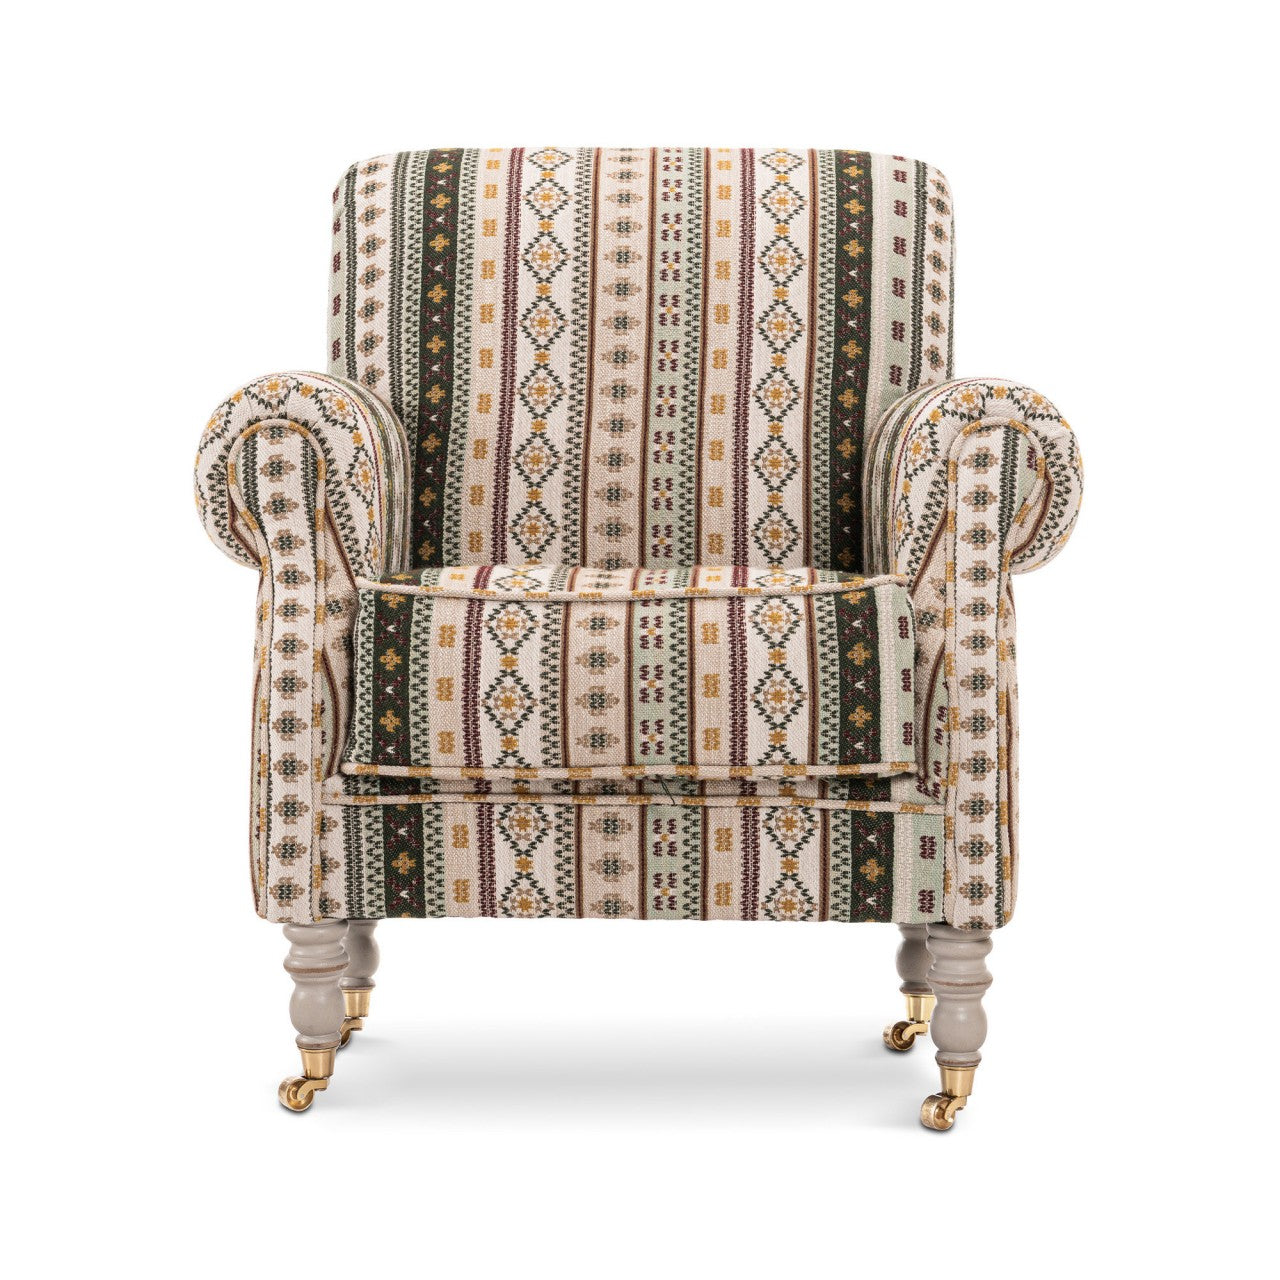 KINGSTON CHAIR - GAISSTEIN Jacquard fabric_Furniture_Mindthegap